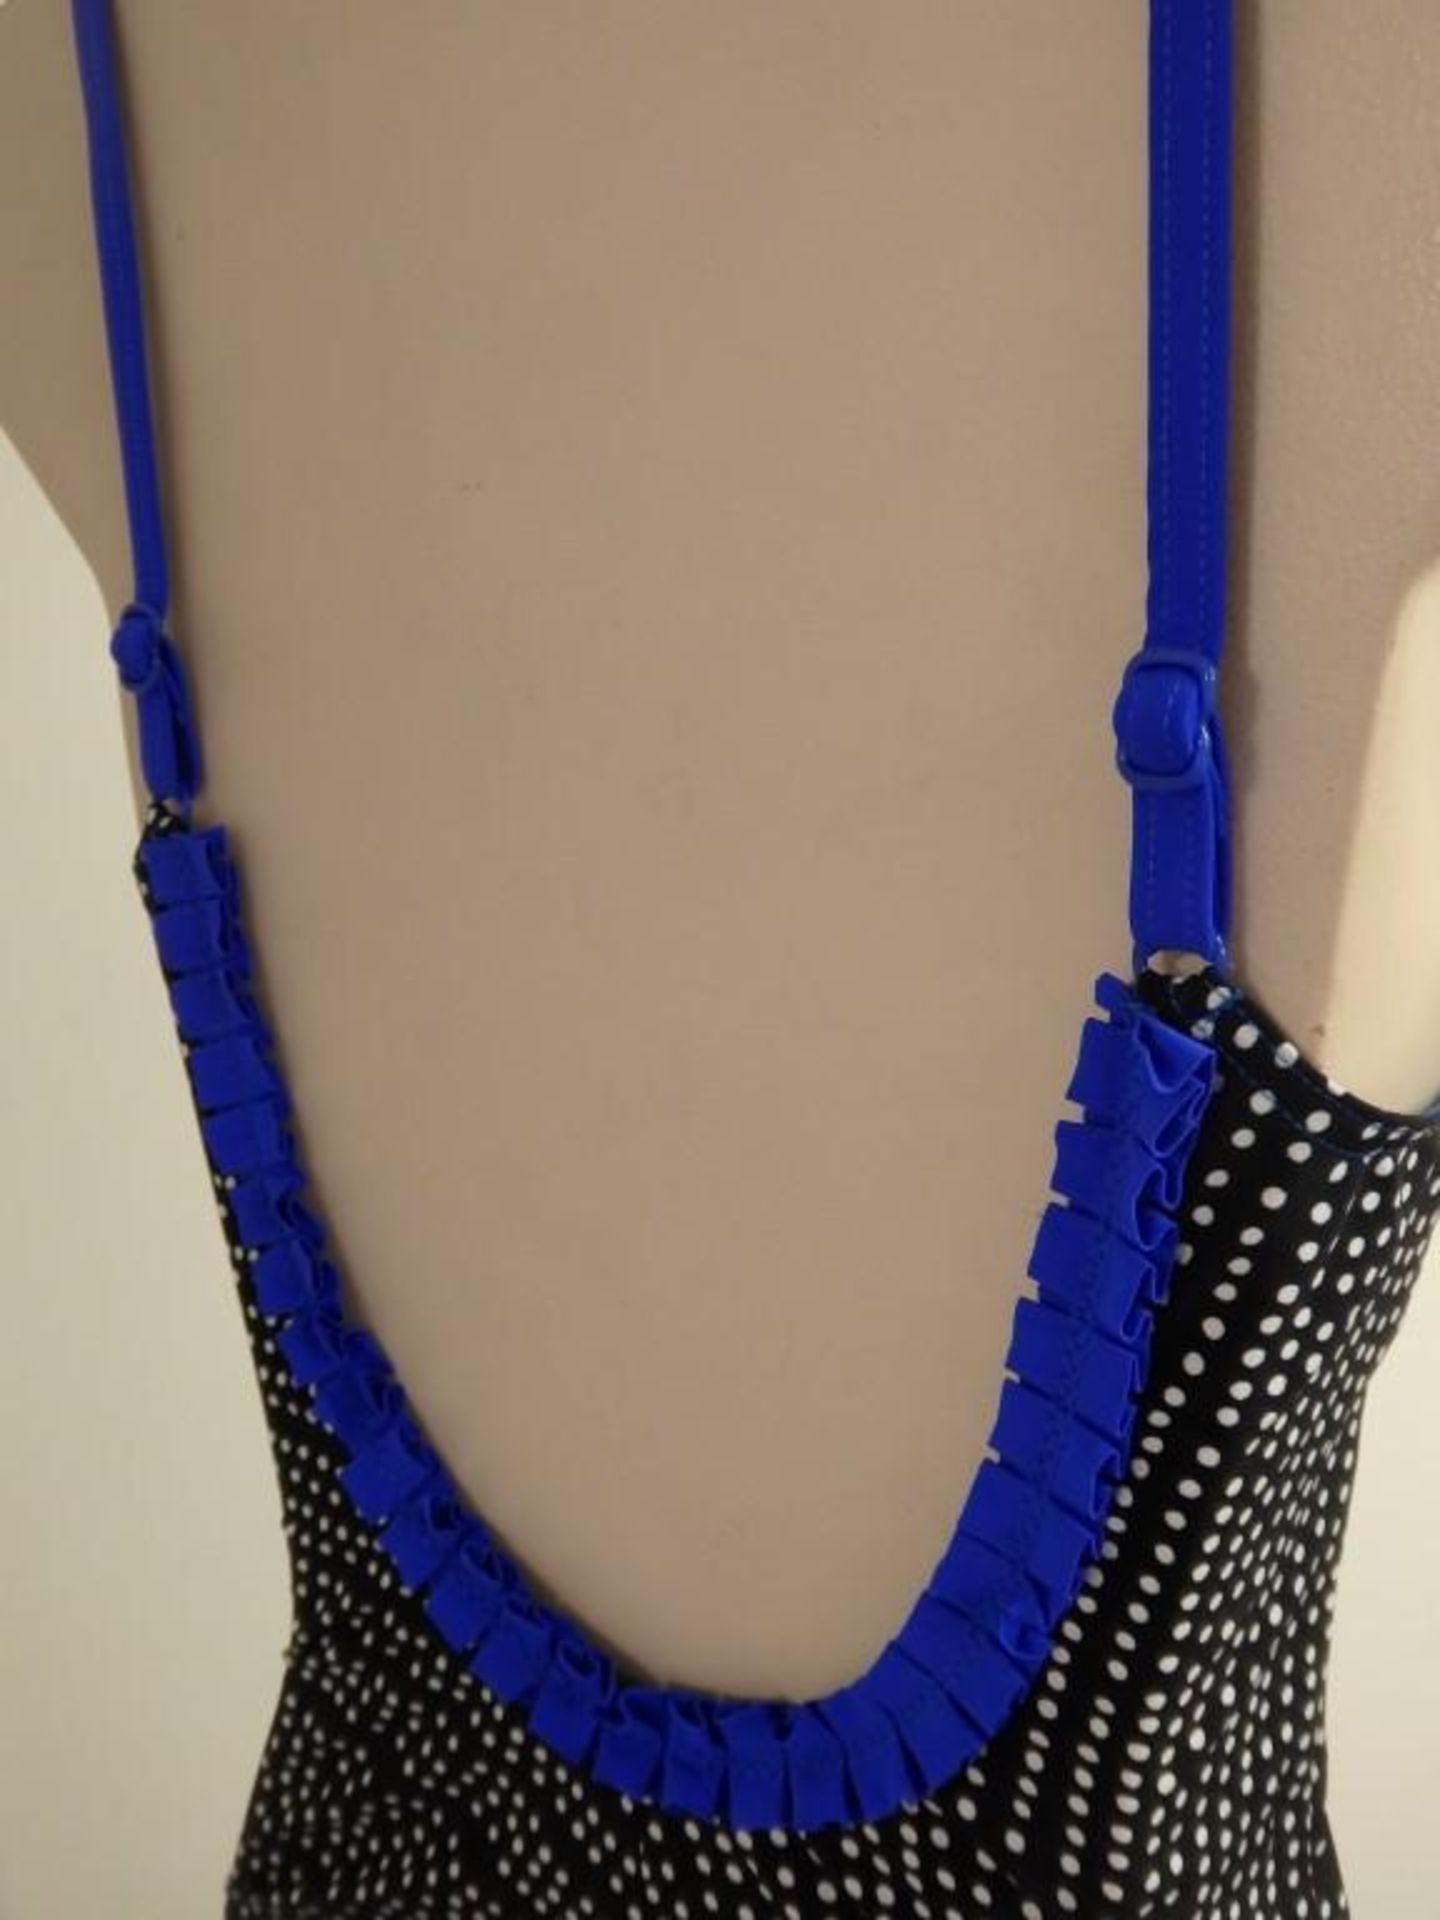 1 x Rasurel - Black Polka dot with royal blue trim &frill Tobago Swimsuit - B21039 - Size 2C - UK 32 - Image 4 of 8